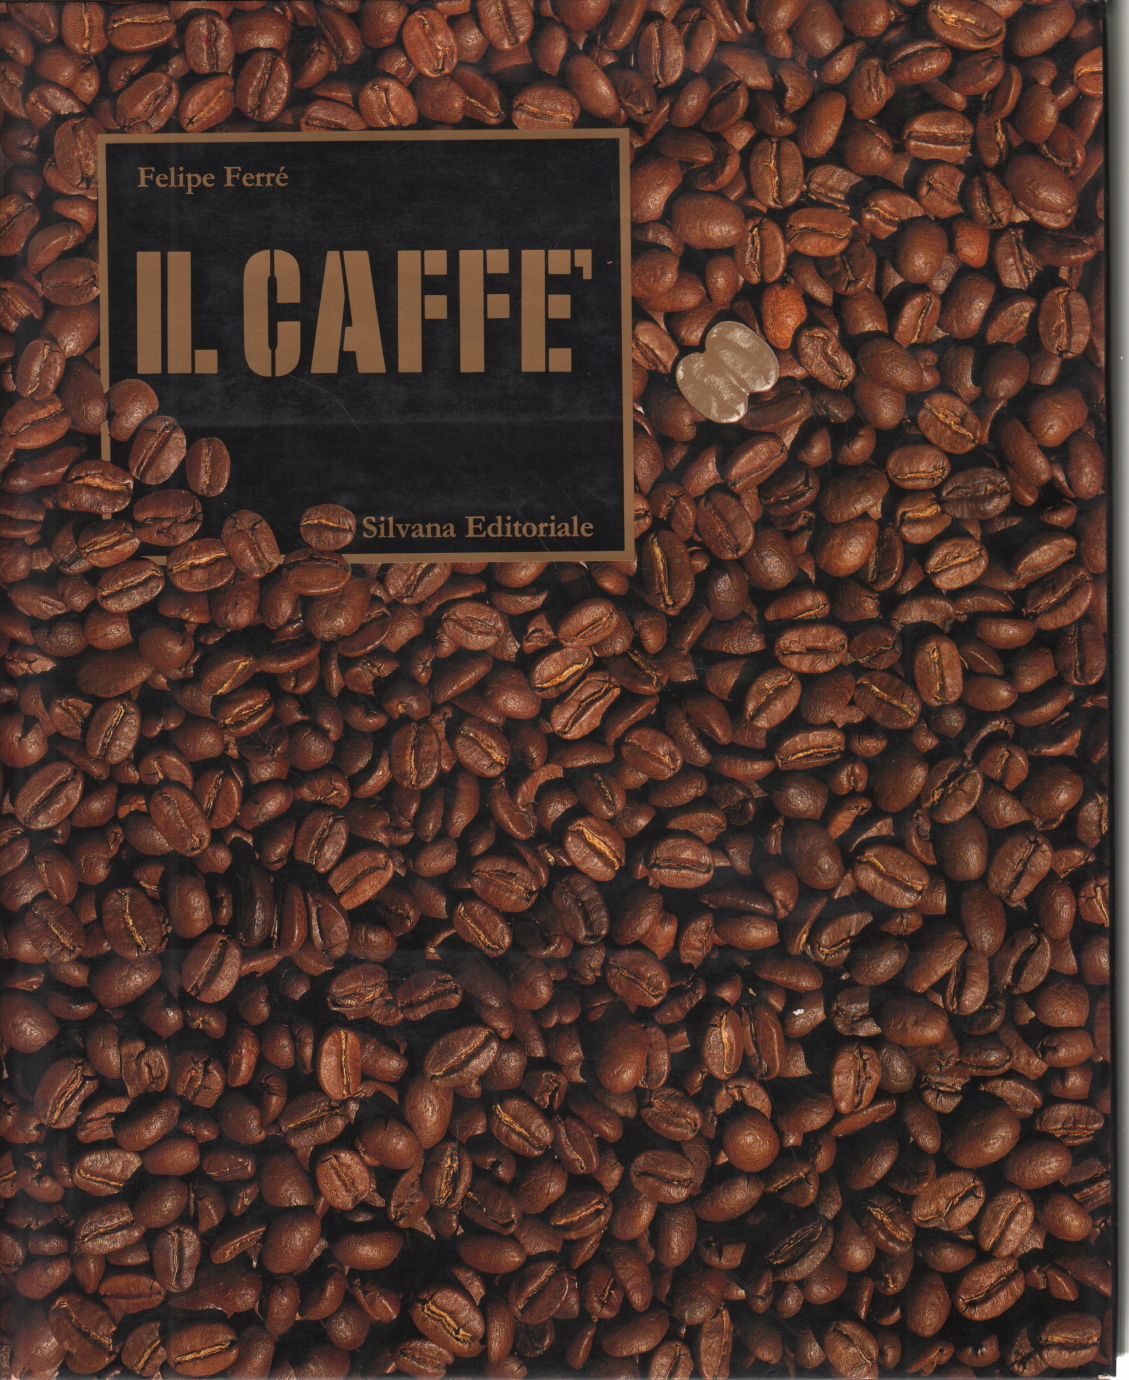 Il caffè, Felipe Ferré